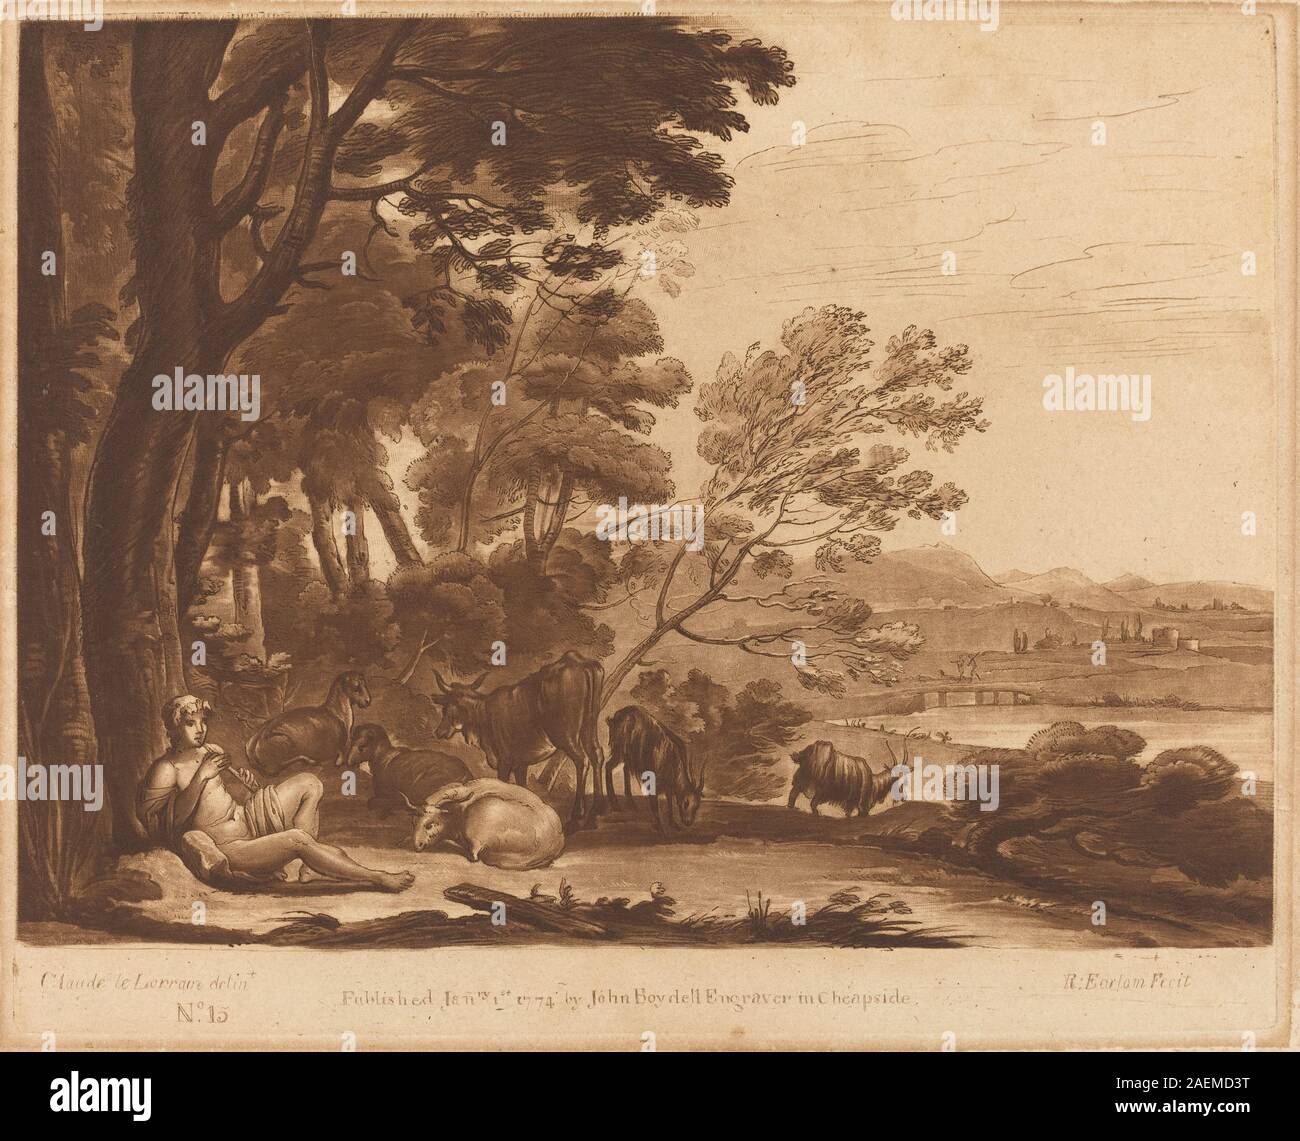 Richard Earlom nach Claude Lorrain, Landschaft Nr. 15 von Liber Veritatis, 1774, Landschaft Nr. 15 von Liber Veritatis; 1774 Datum Stockfoto